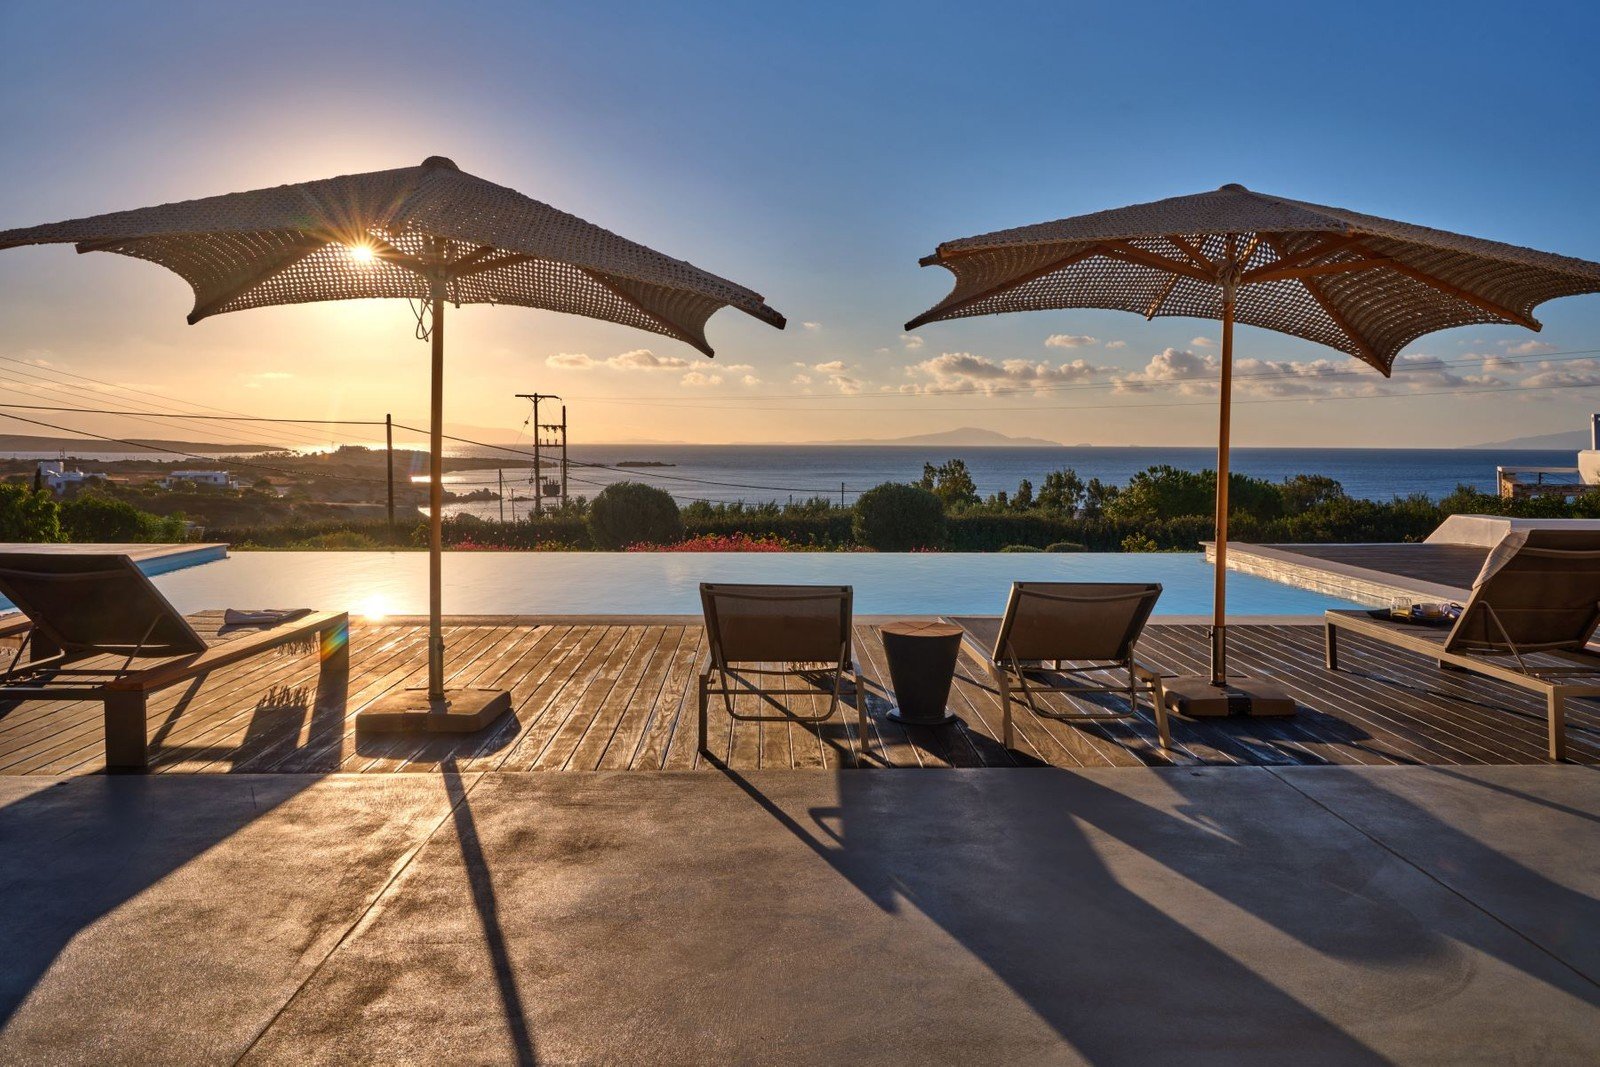 Francis York Luxury Villa in Paros, Greece Eligible For Greek Golden Visa Program 29.jpeg